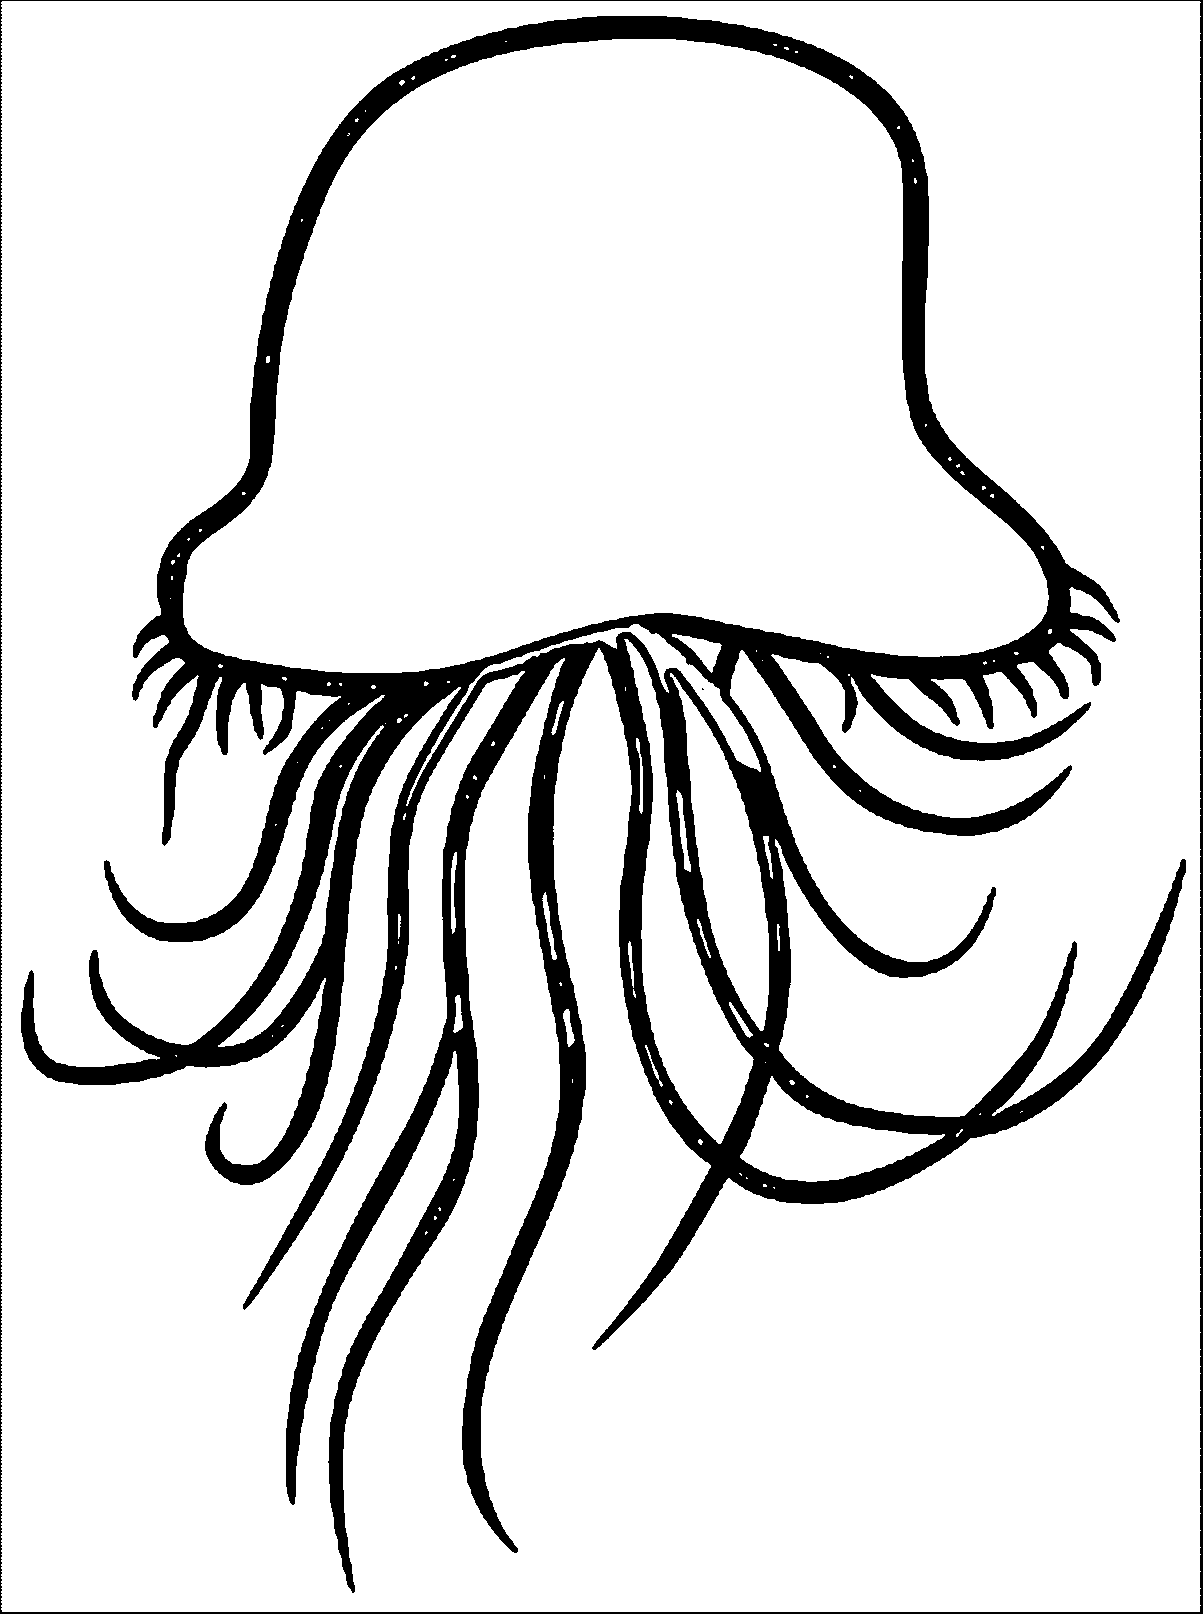 jellyfish clipart black and white - photo #23